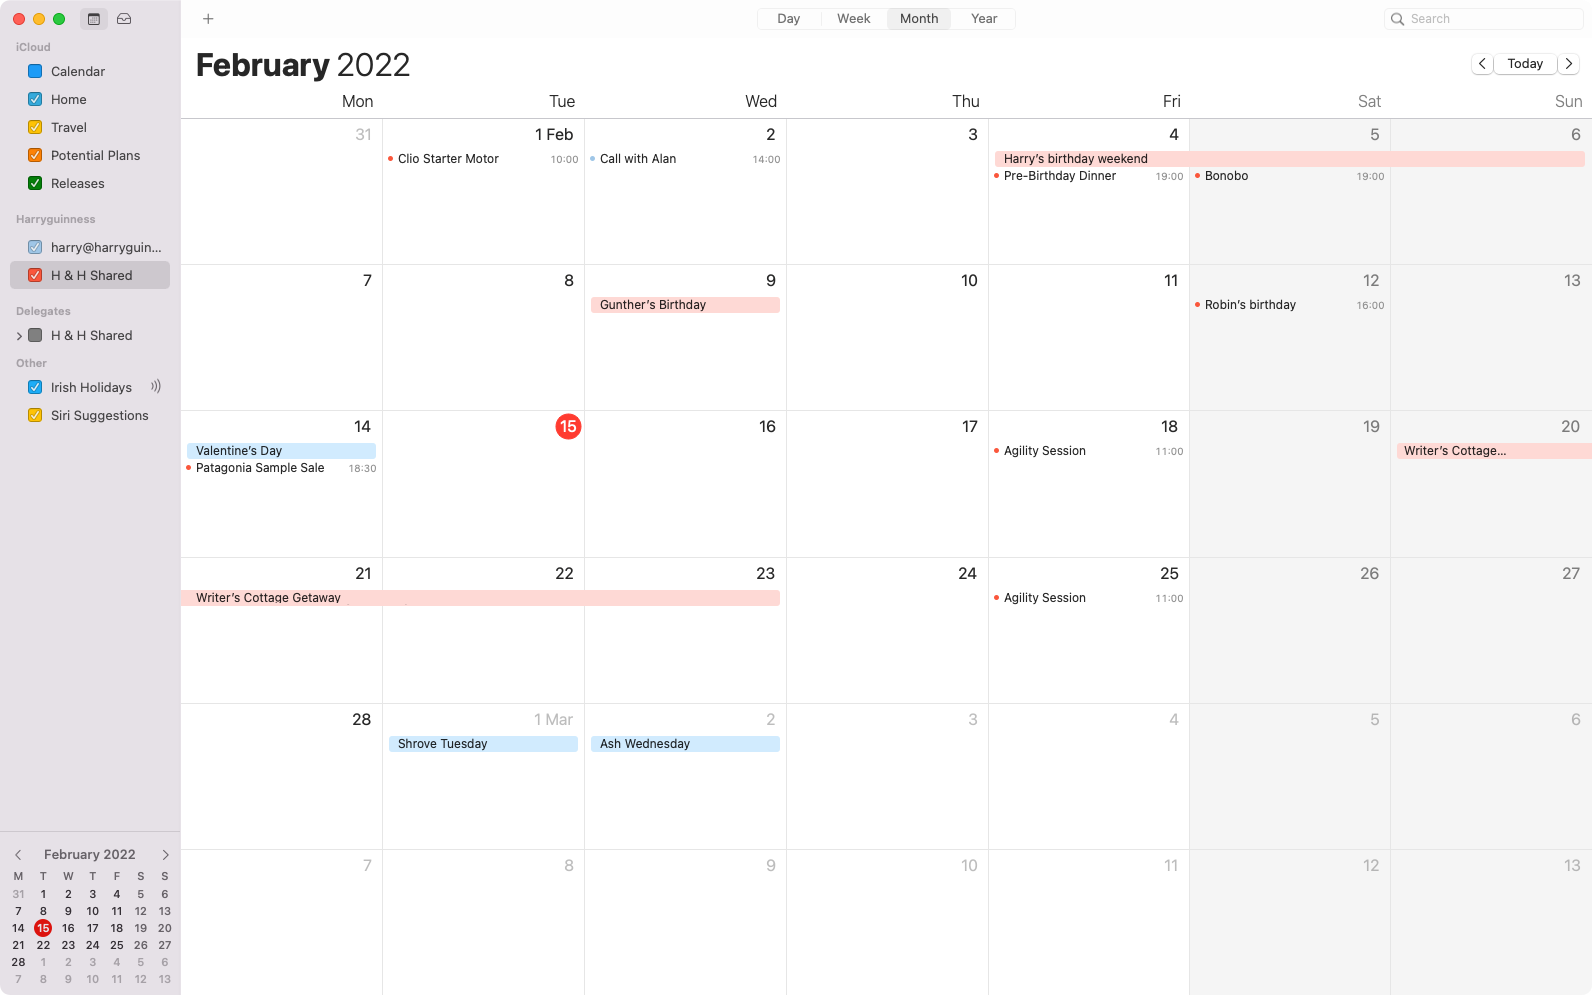 app launcher for google calendar for mac